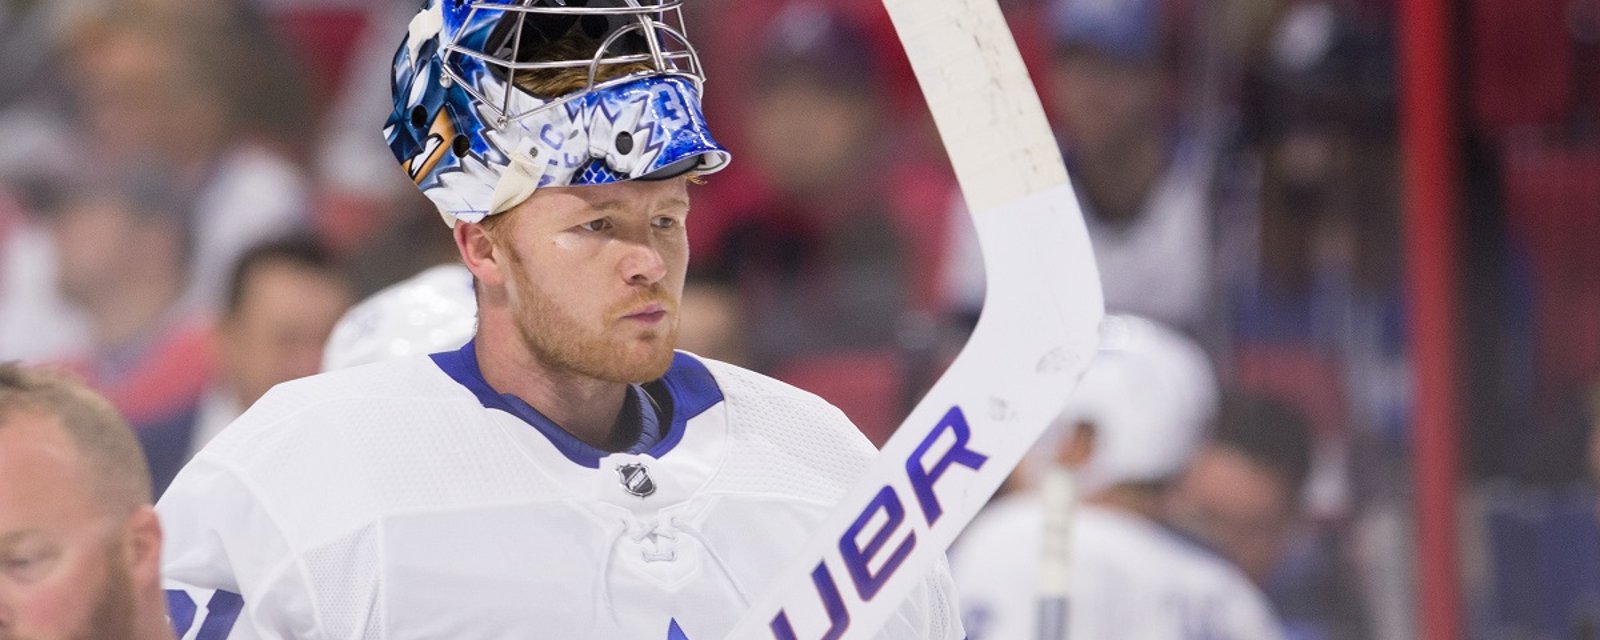 Breaking: Insider confirms injury to Leafs goaltender Frederik Andersen.